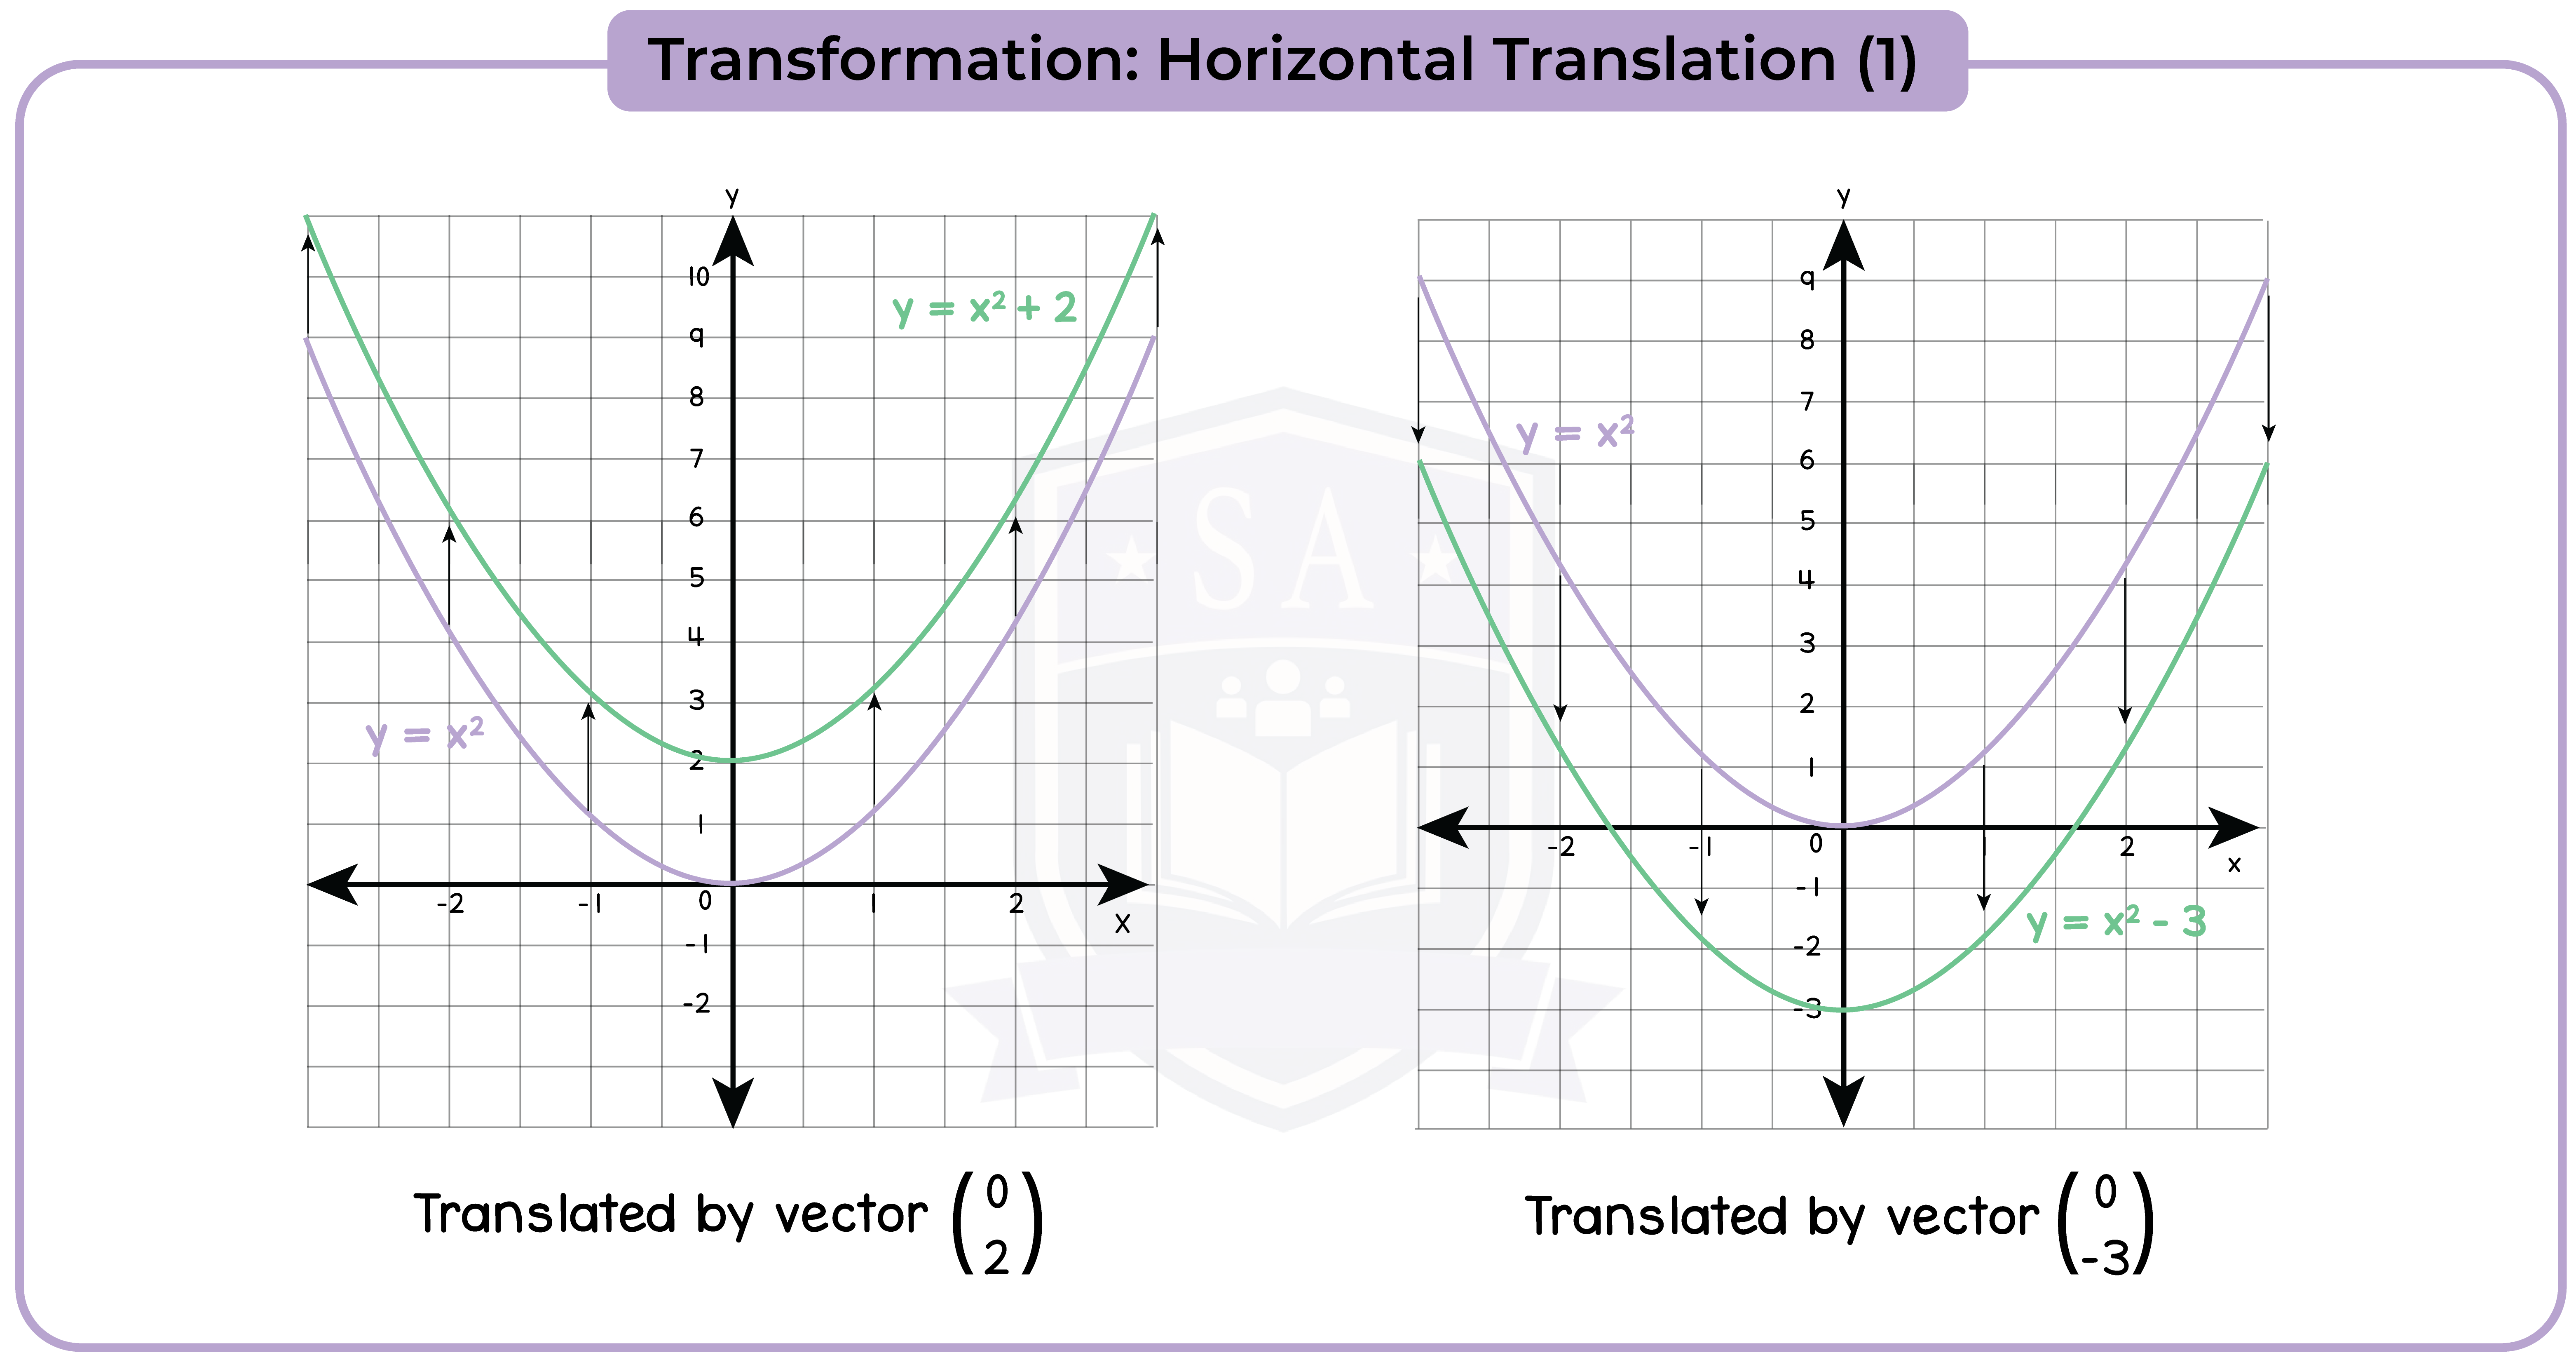 edexcel_igcse_mathematics a_topic 23_graphs_007_Transformation: Horizontal Translation (1)